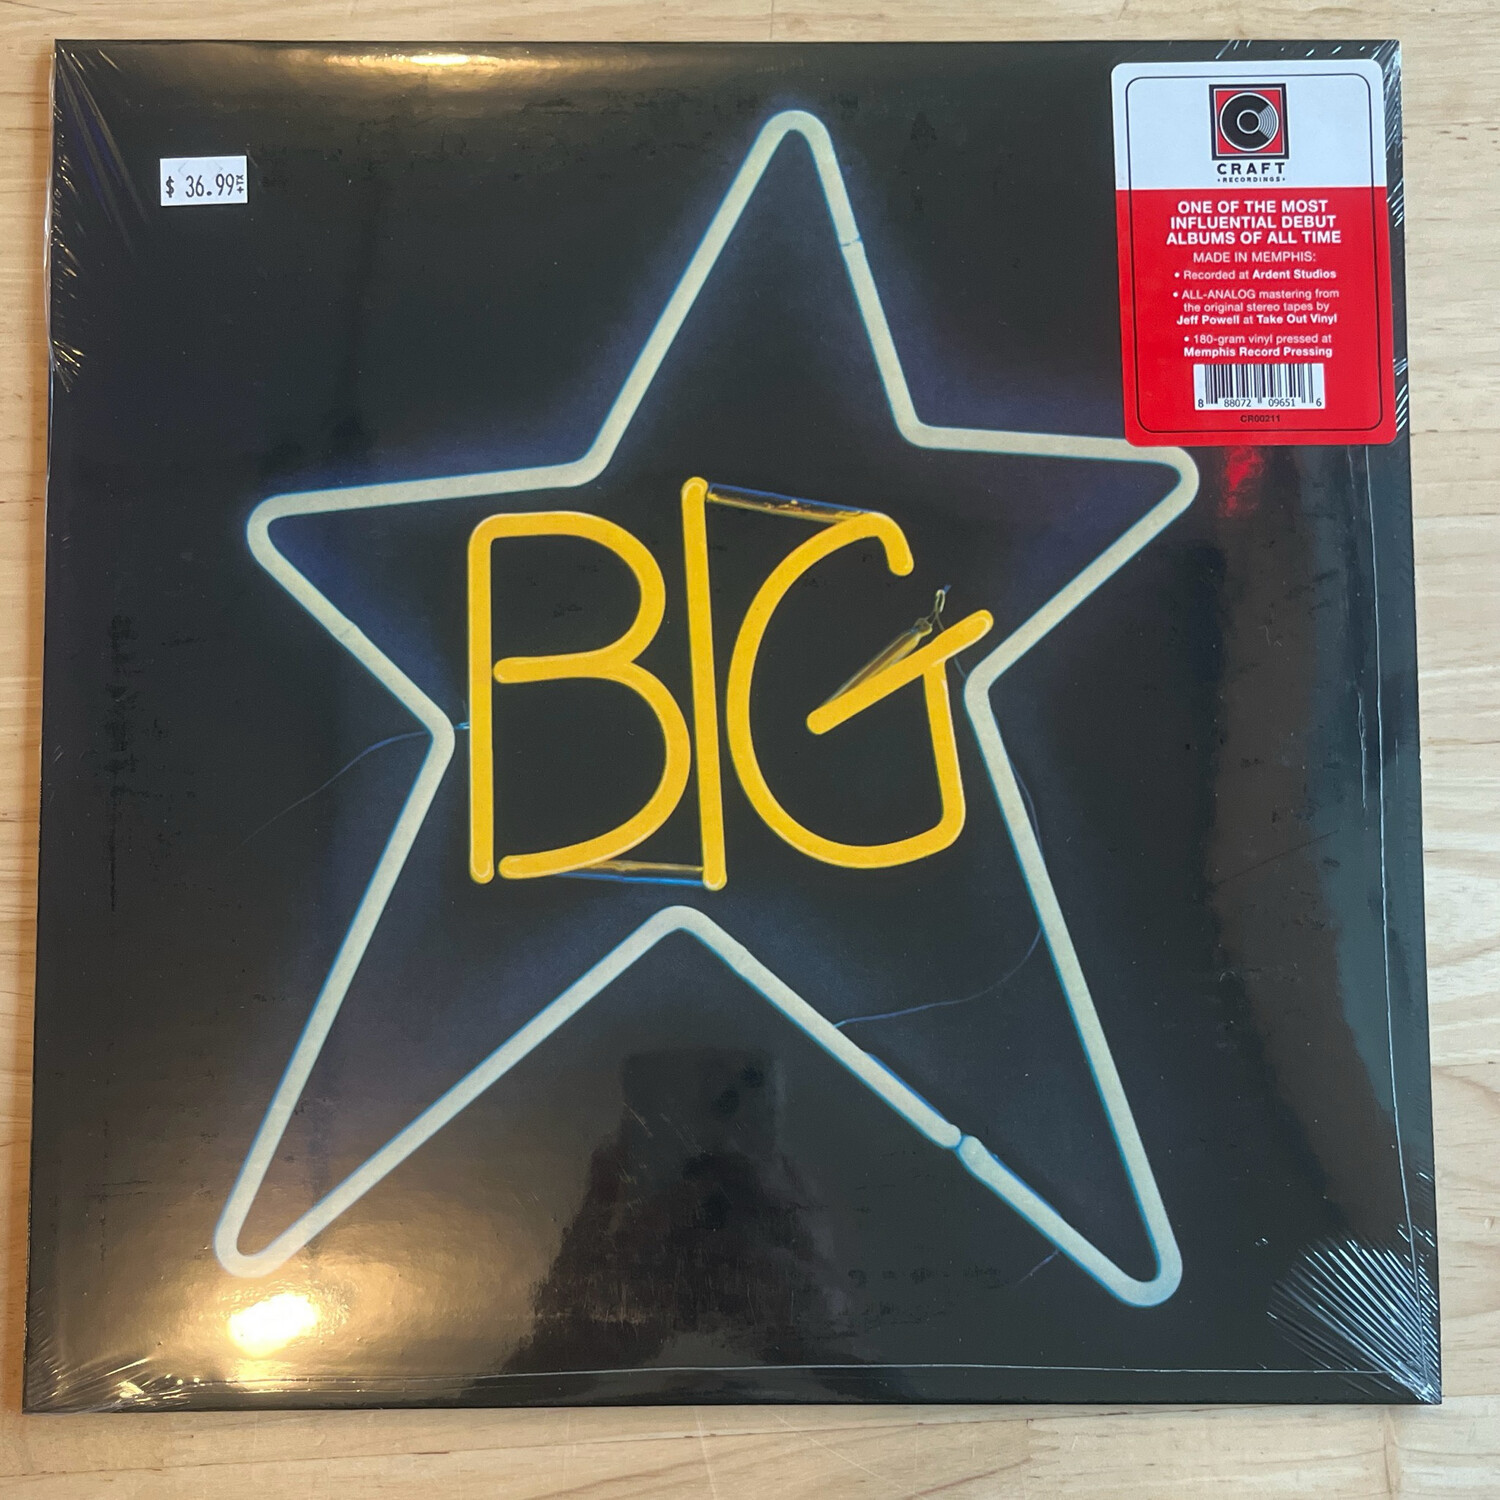 Big Star "#1 Record" LP (Craft reissue)